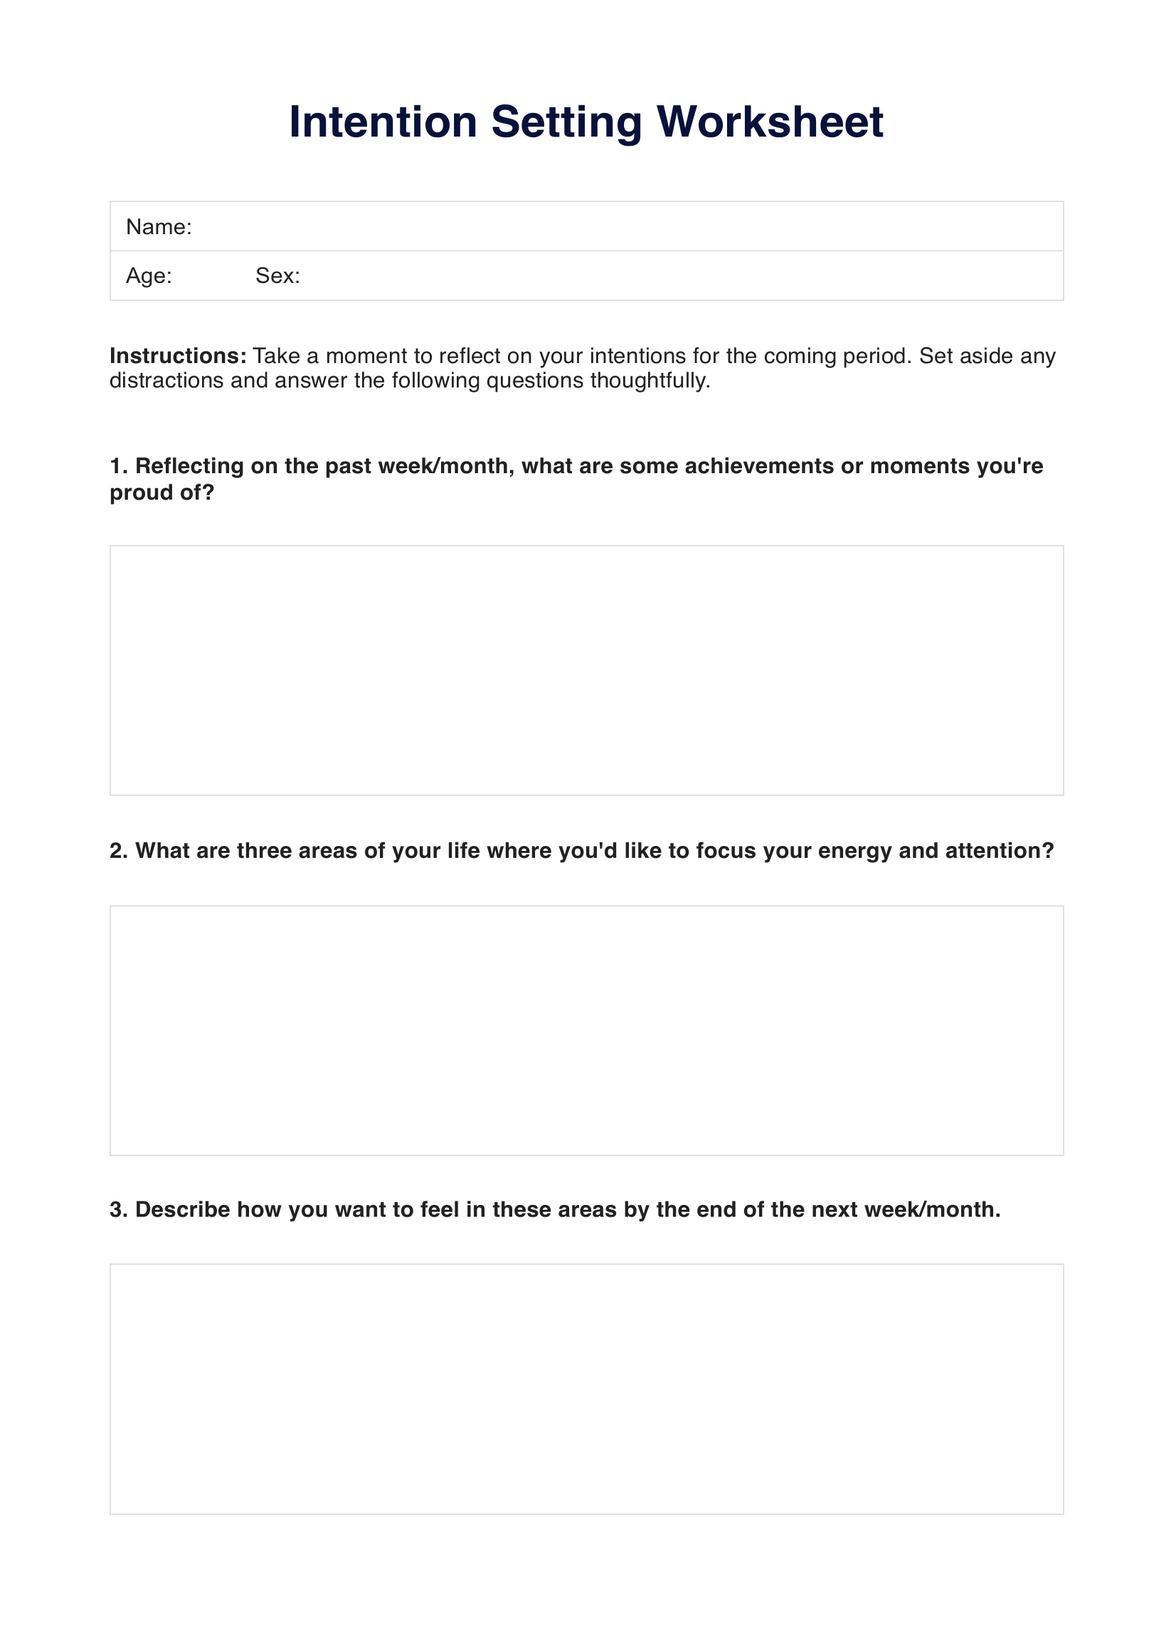 Intention Setting Worksheet PDF Example